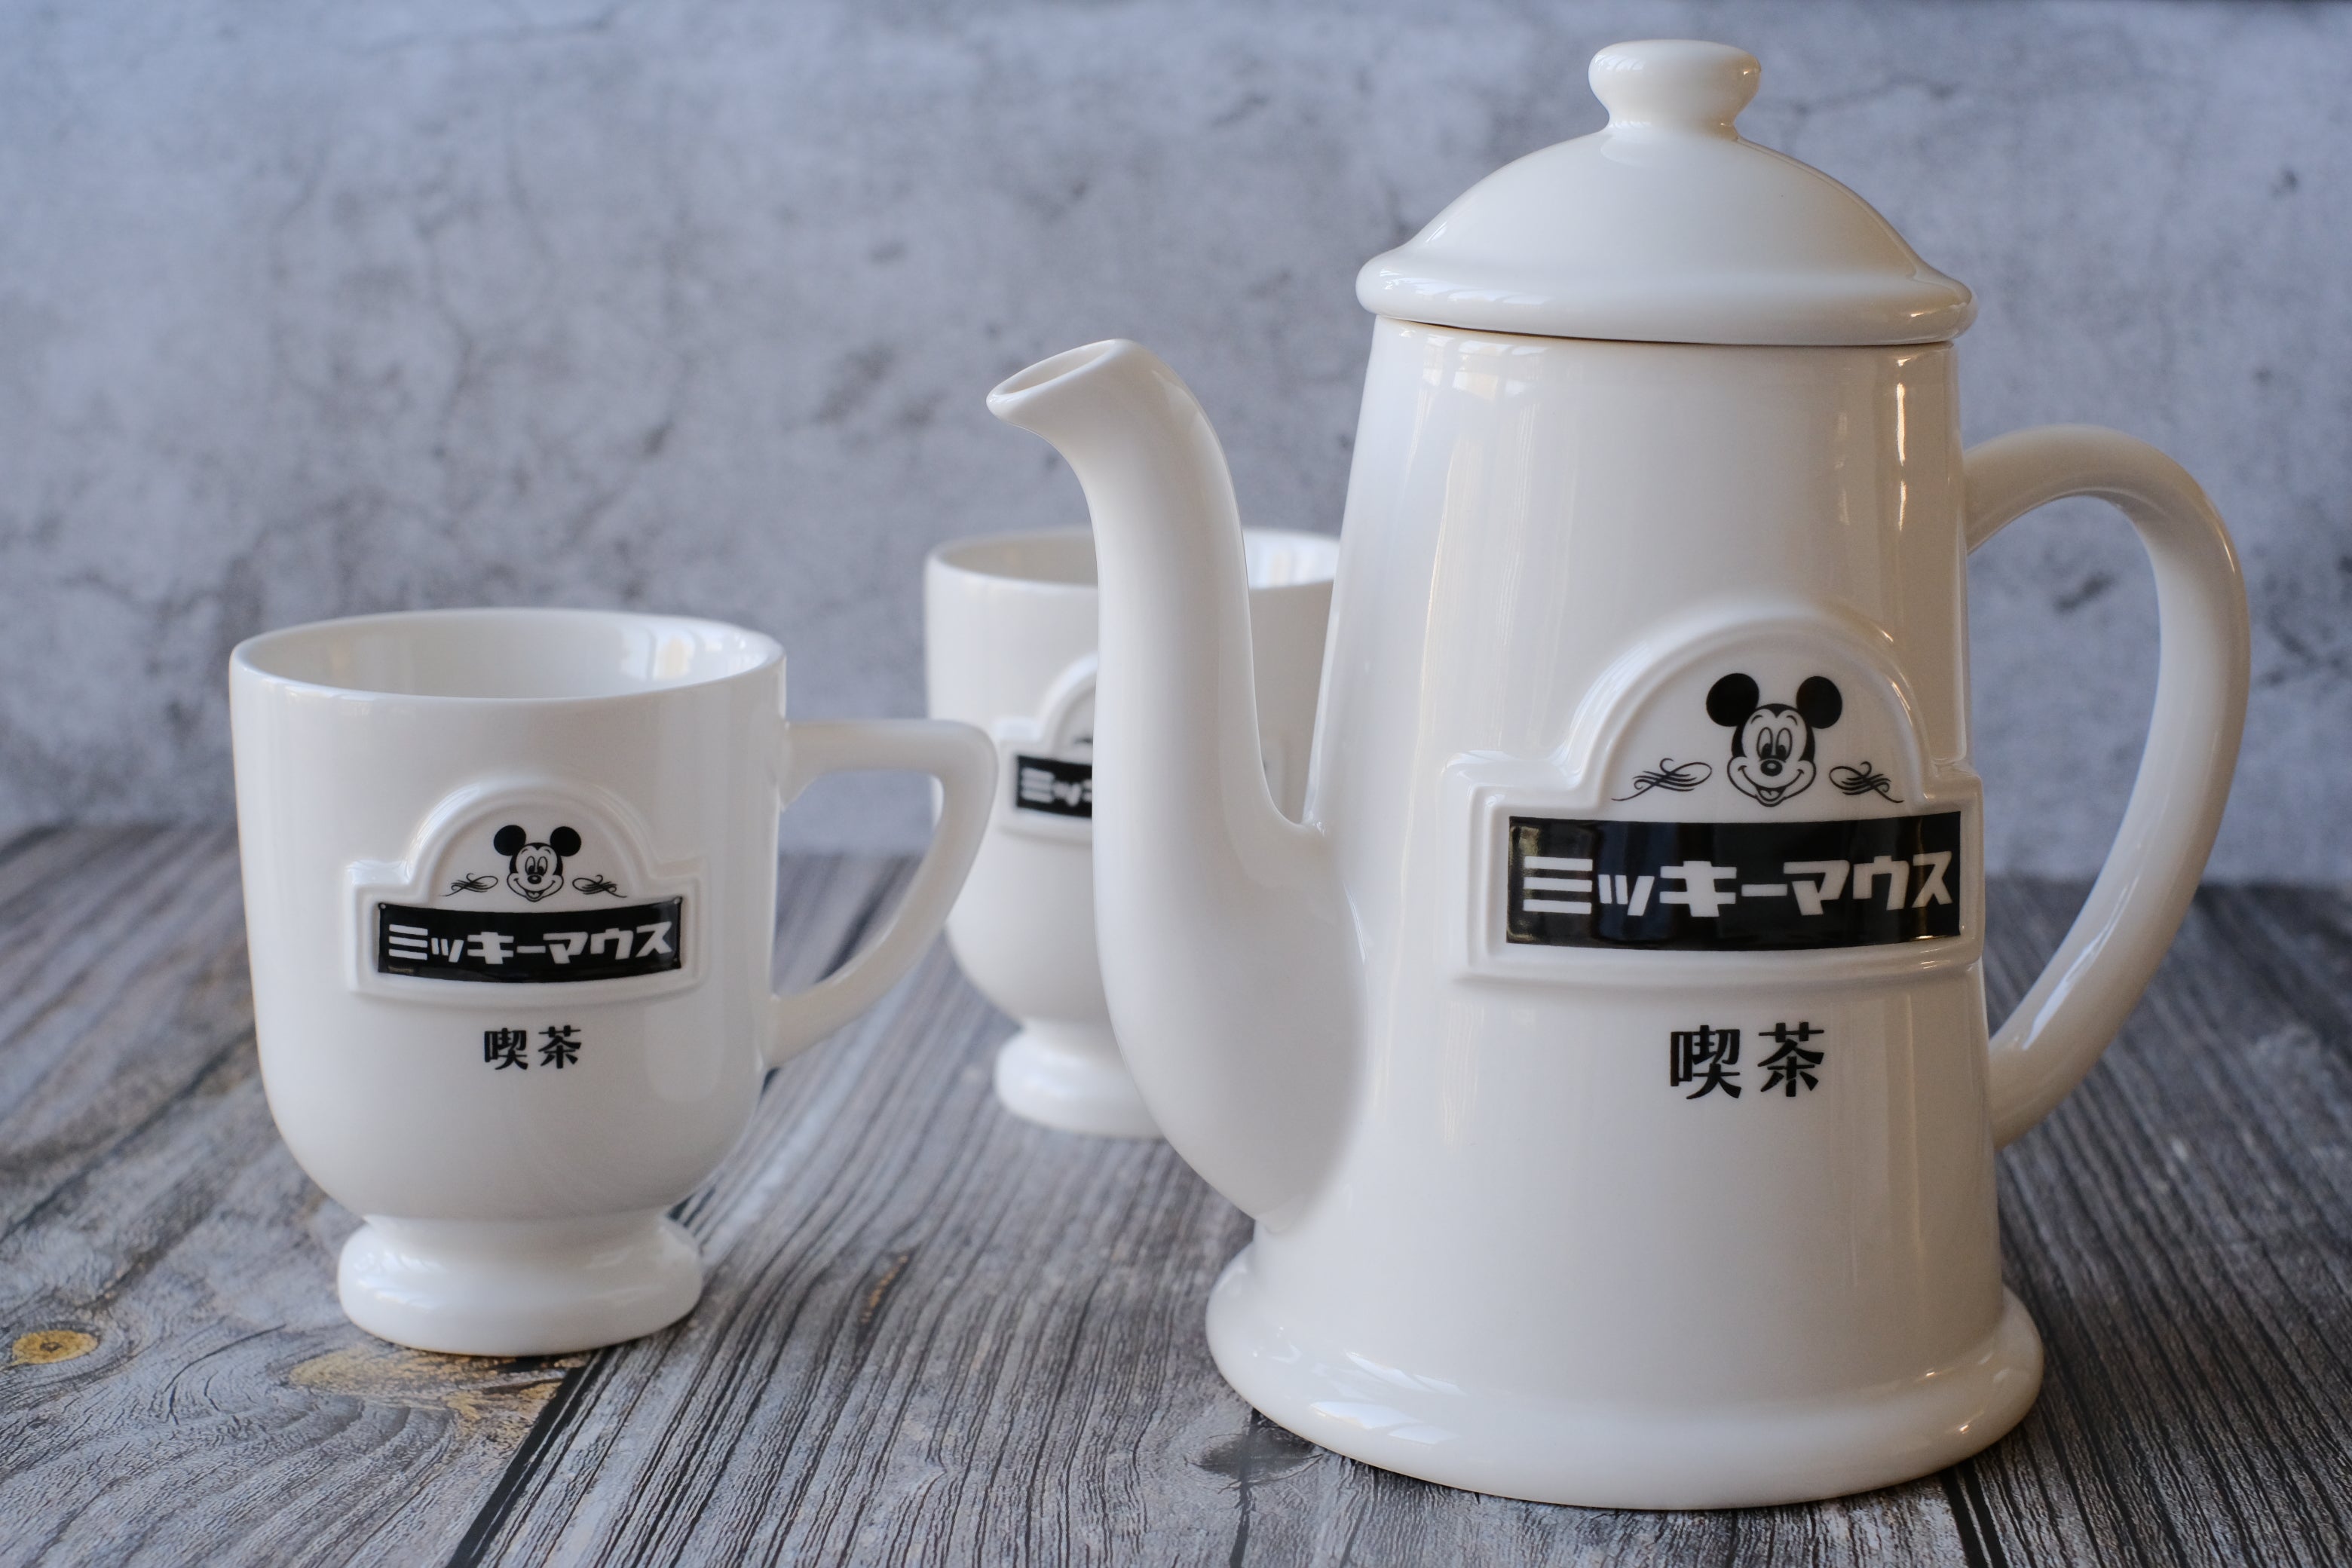 Original Ceramic Cups Disney, Cofee Mugs Disney Tea Cups